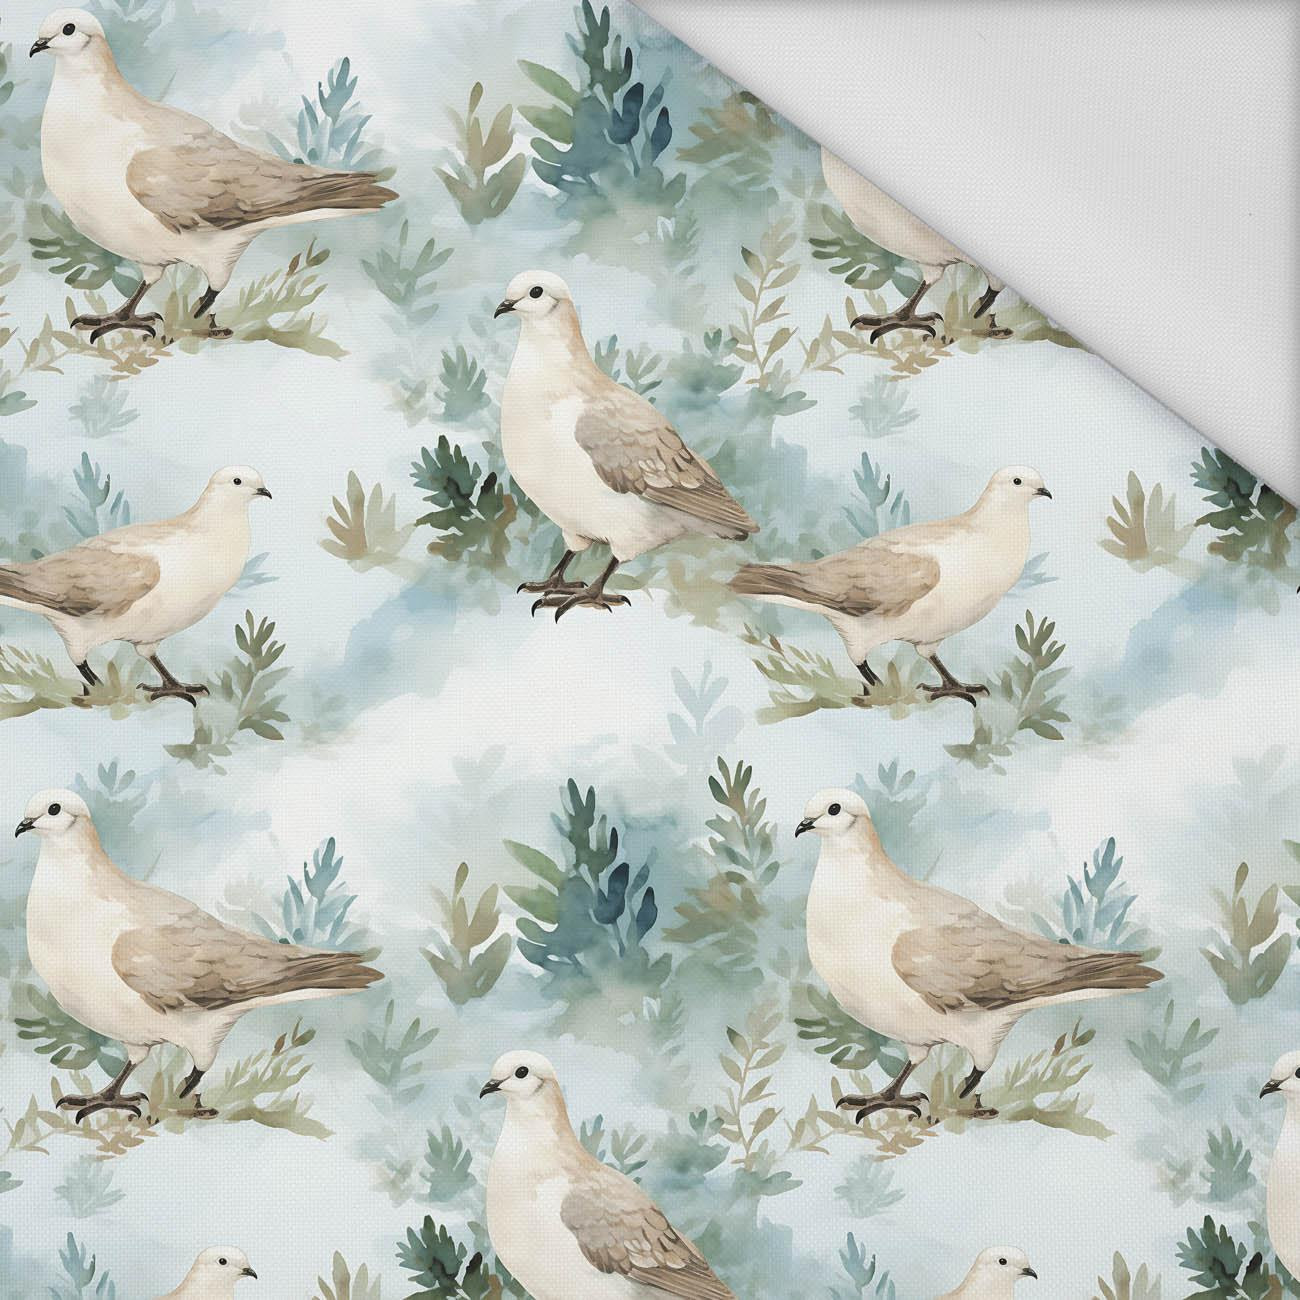 PASTEL BIRDS PAT. 2 - Waterproof woven fabric